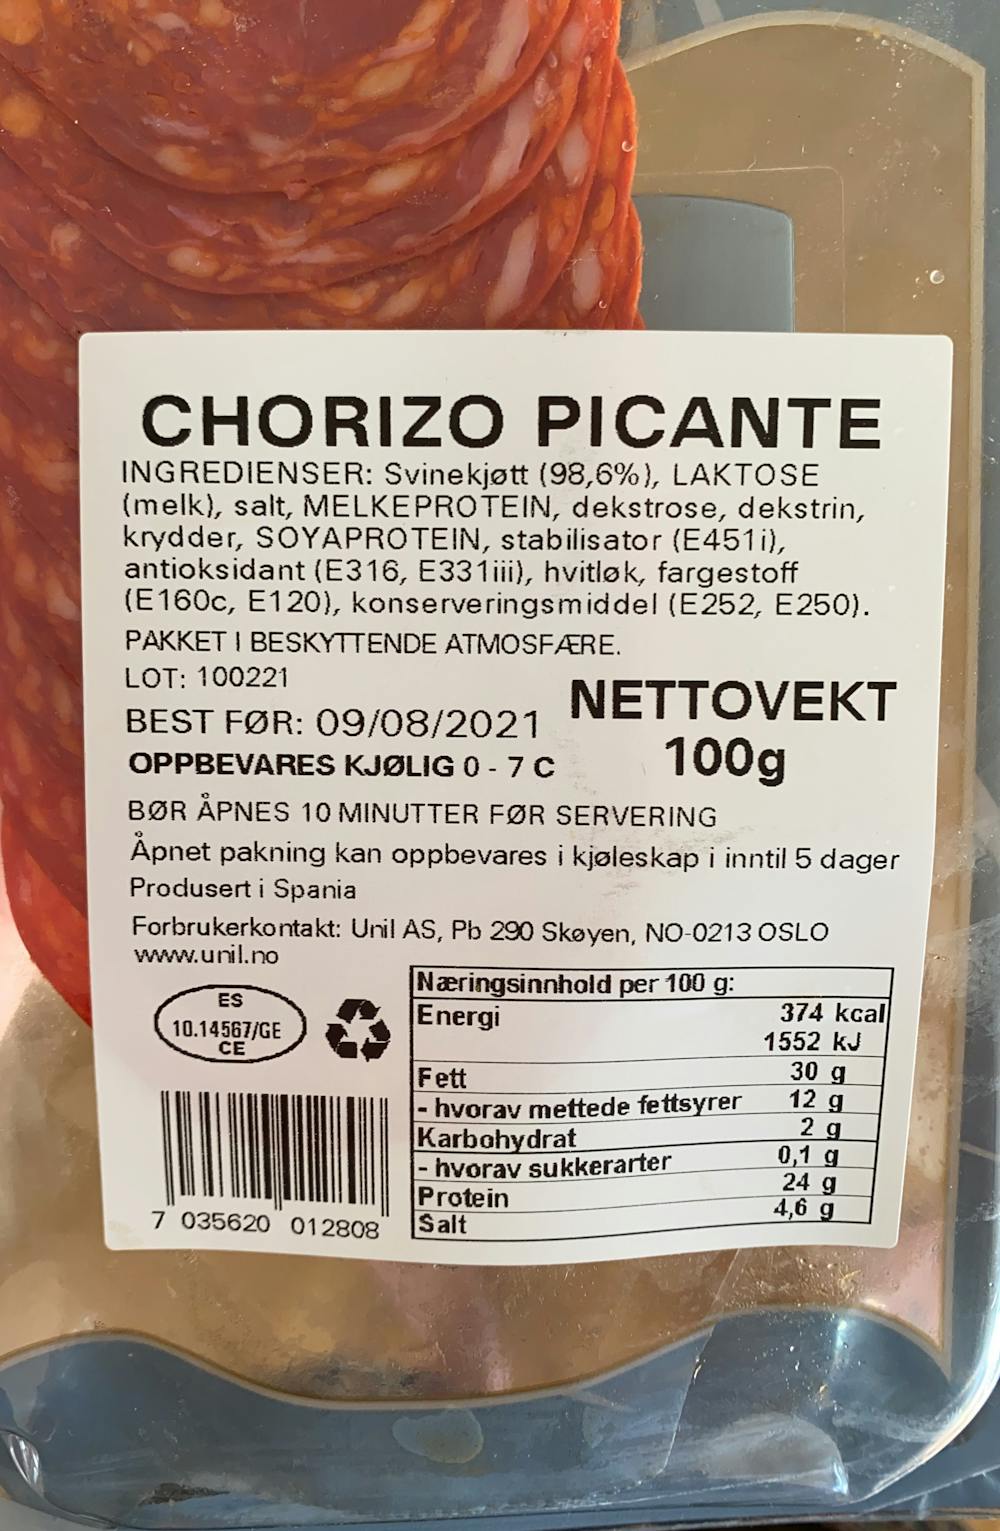 Ingredienslisten til Chorizo picante, Porxas